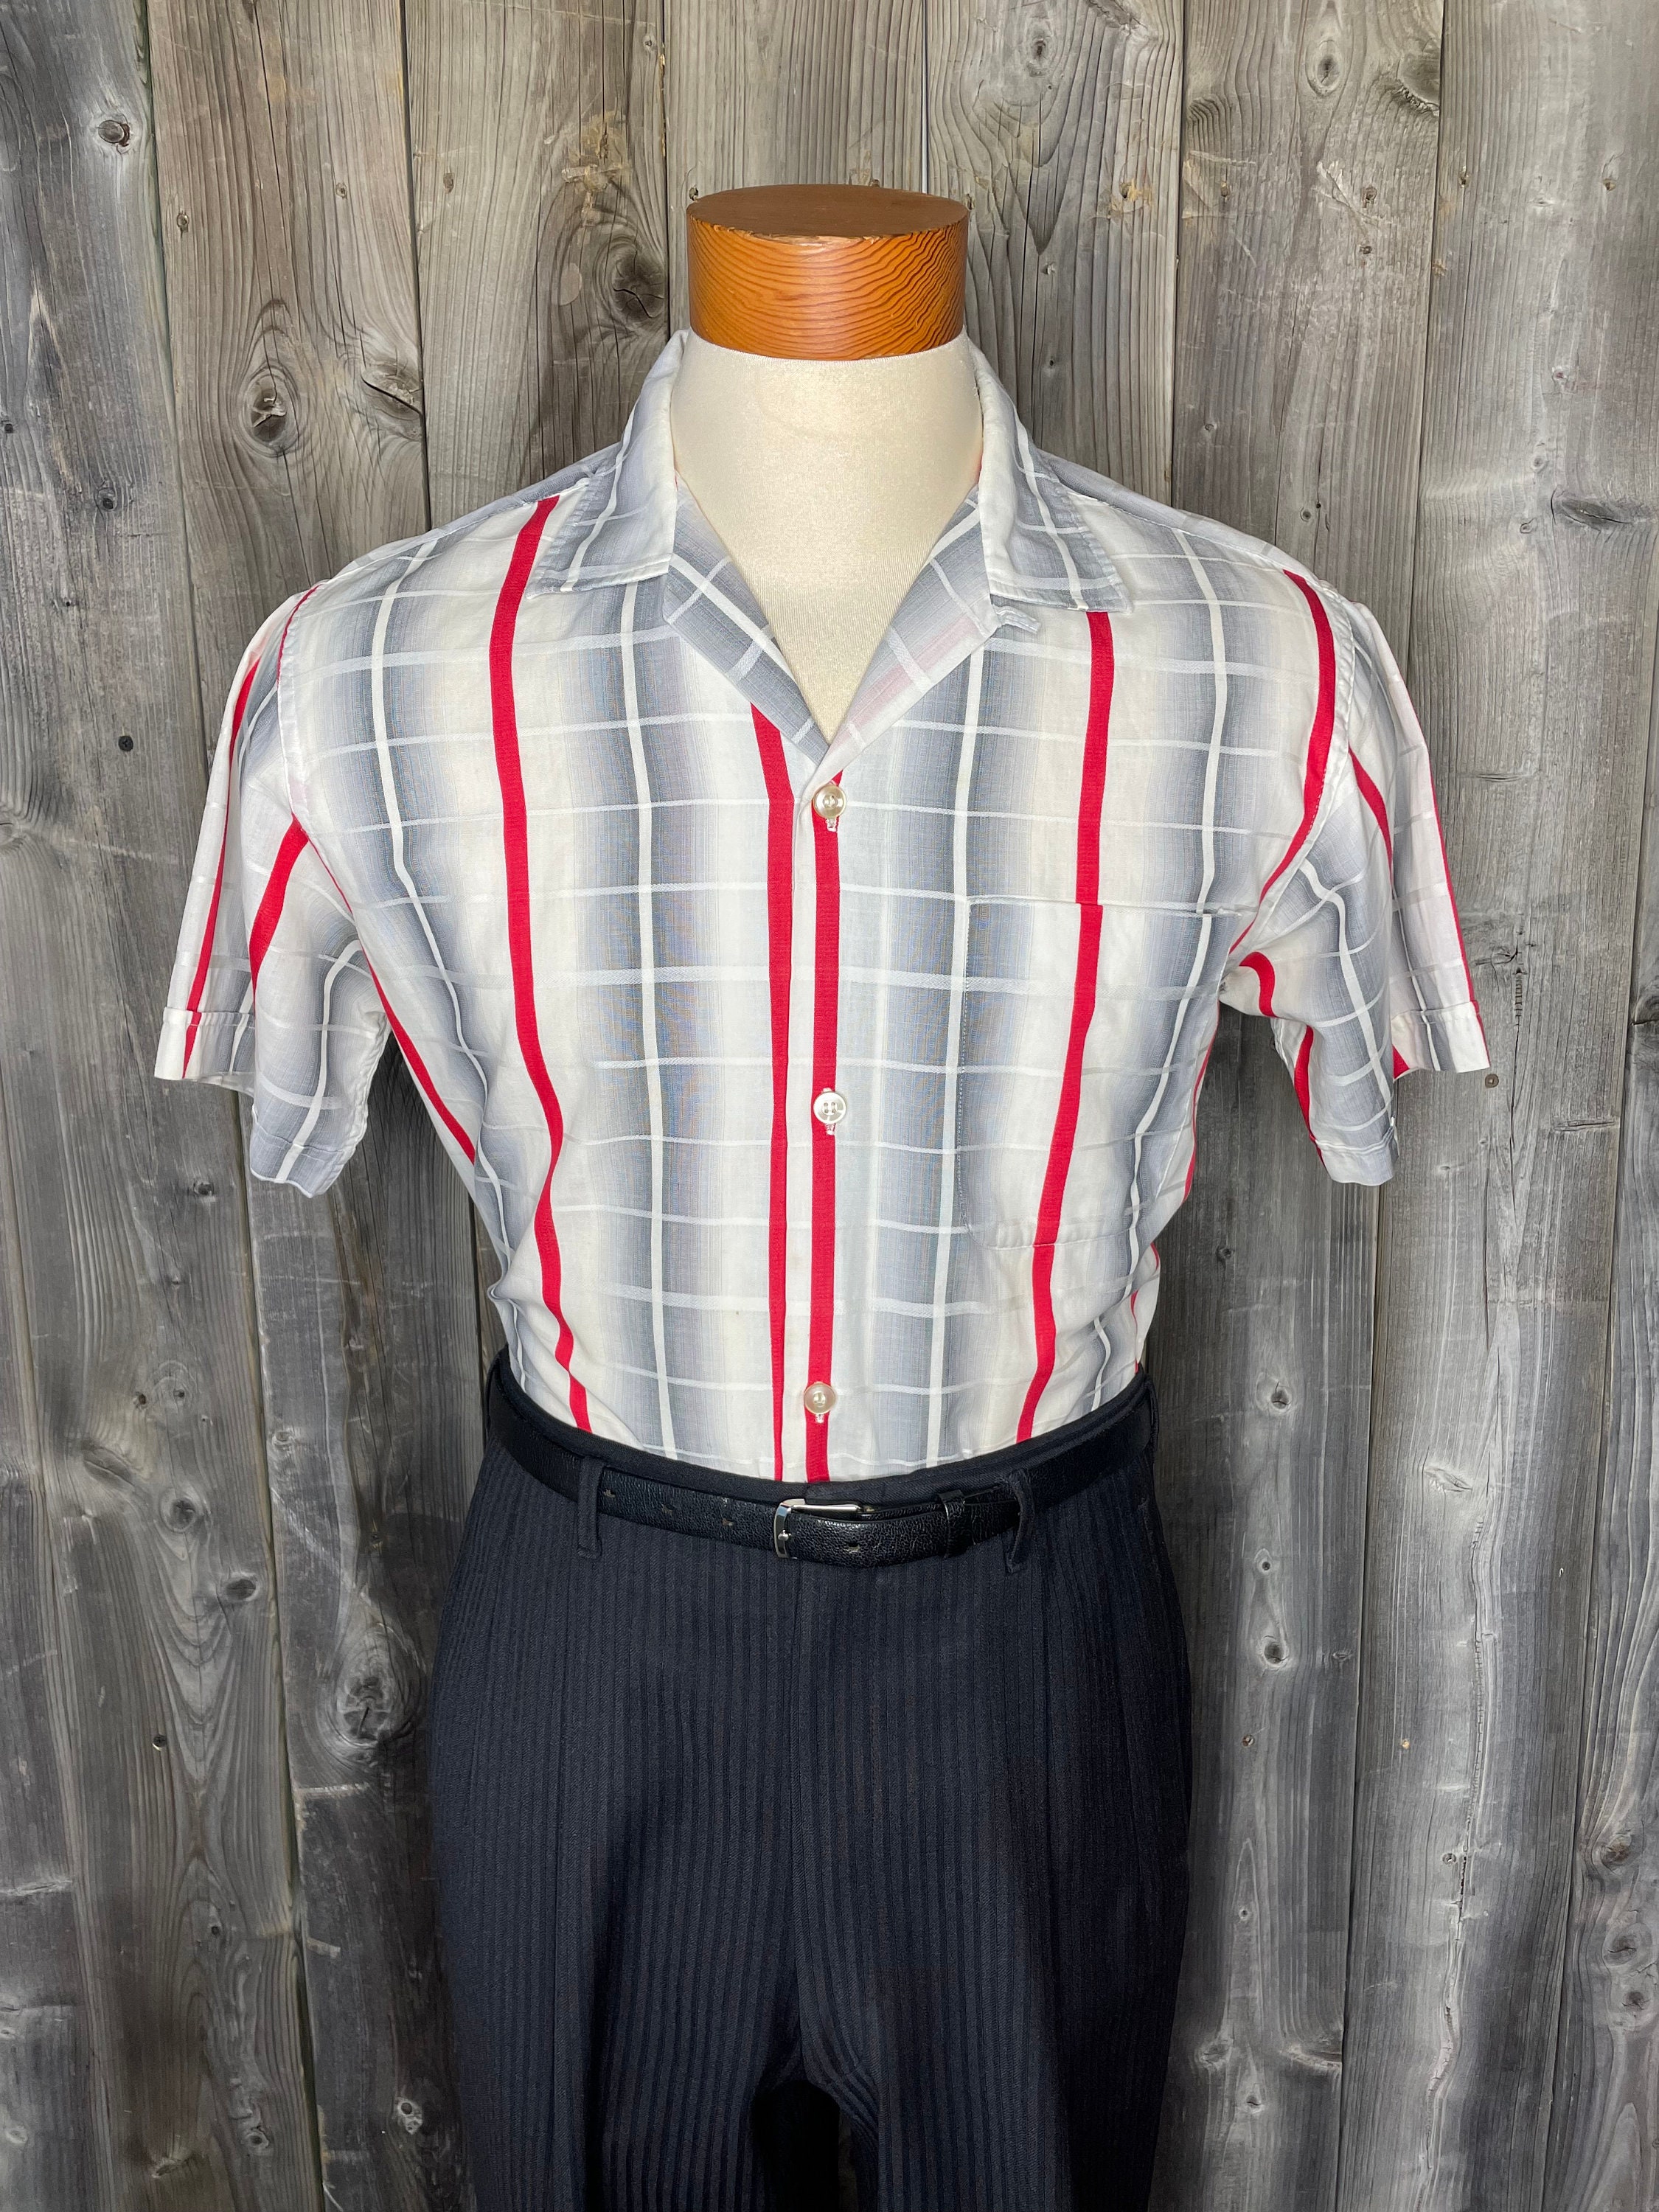 VINTAGE 1950s Nelson Paige Loop Collar Shirt / Button Down / Short Sleeve /  Dress Shirt / Button Up / Men’s Wear / Rockabilly / True Vintage